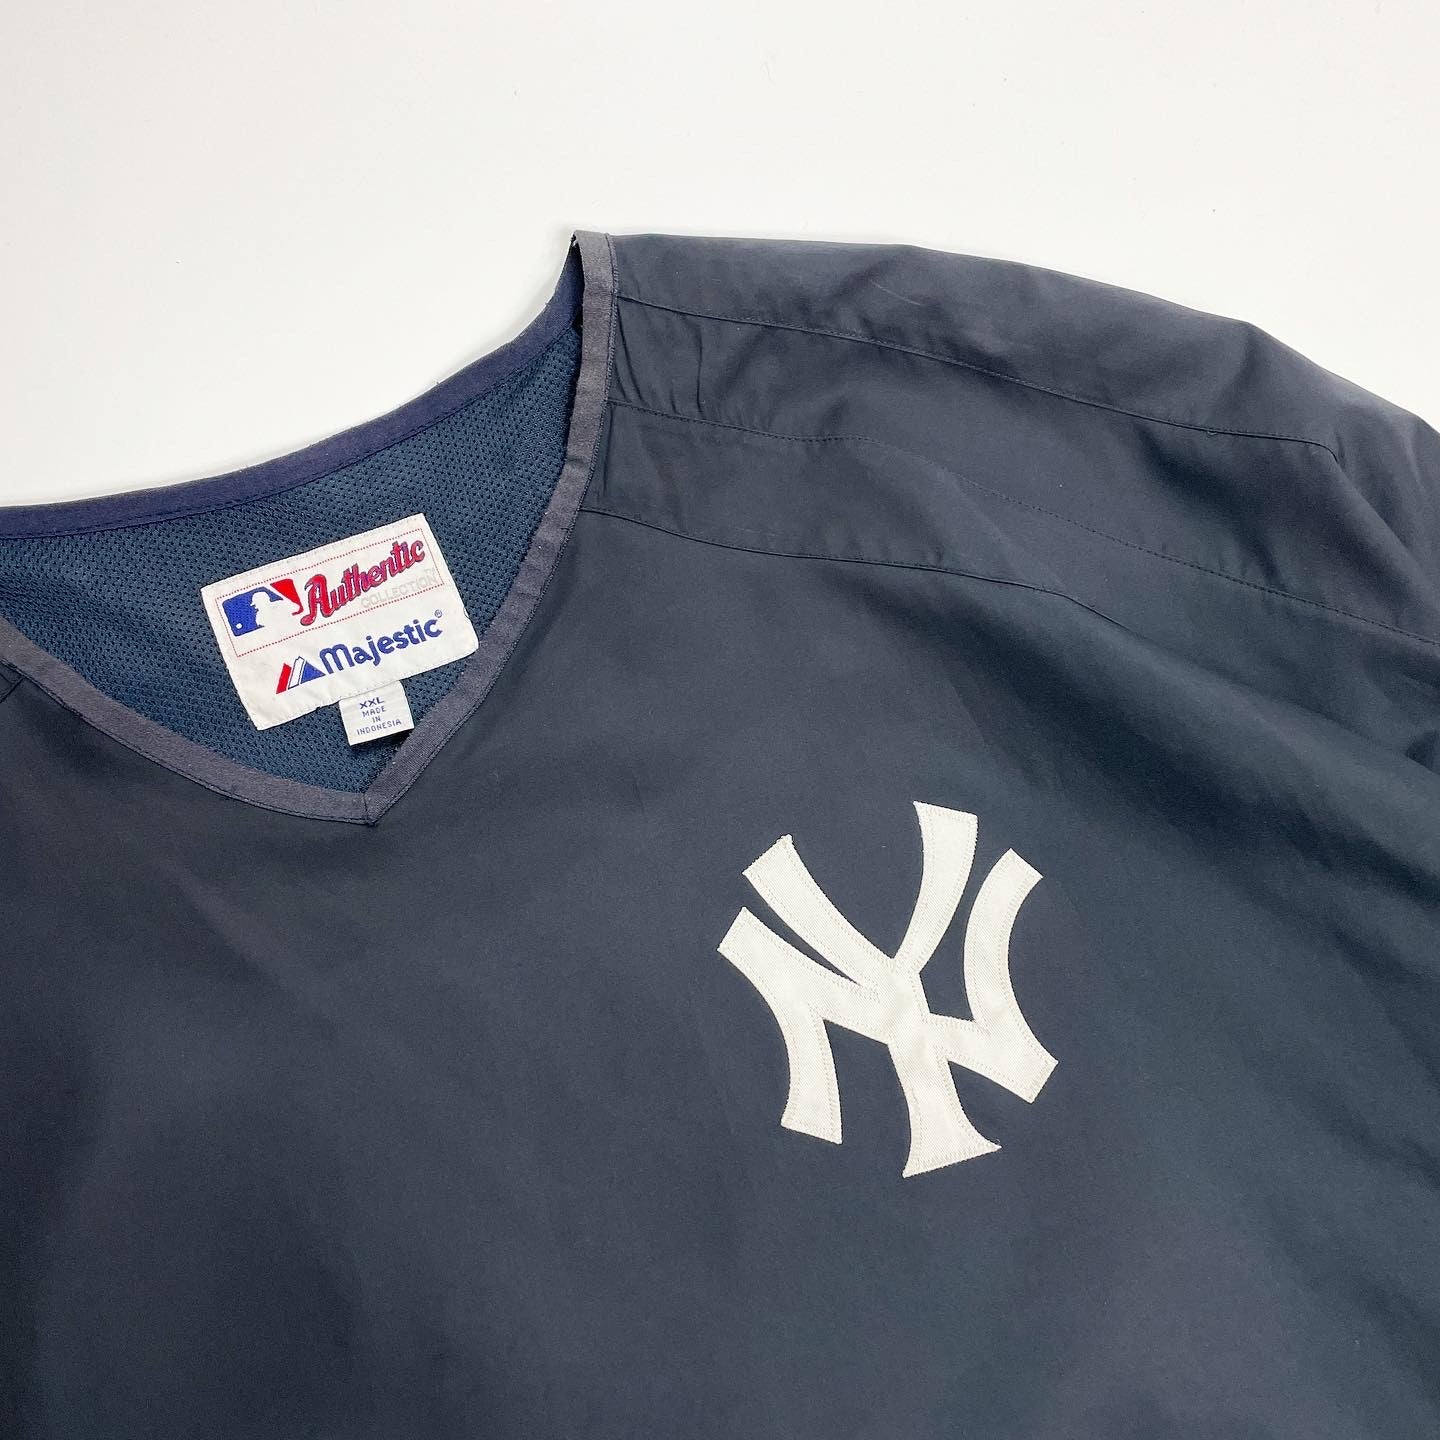 New York Yankees Vintage Warm Up Jacket